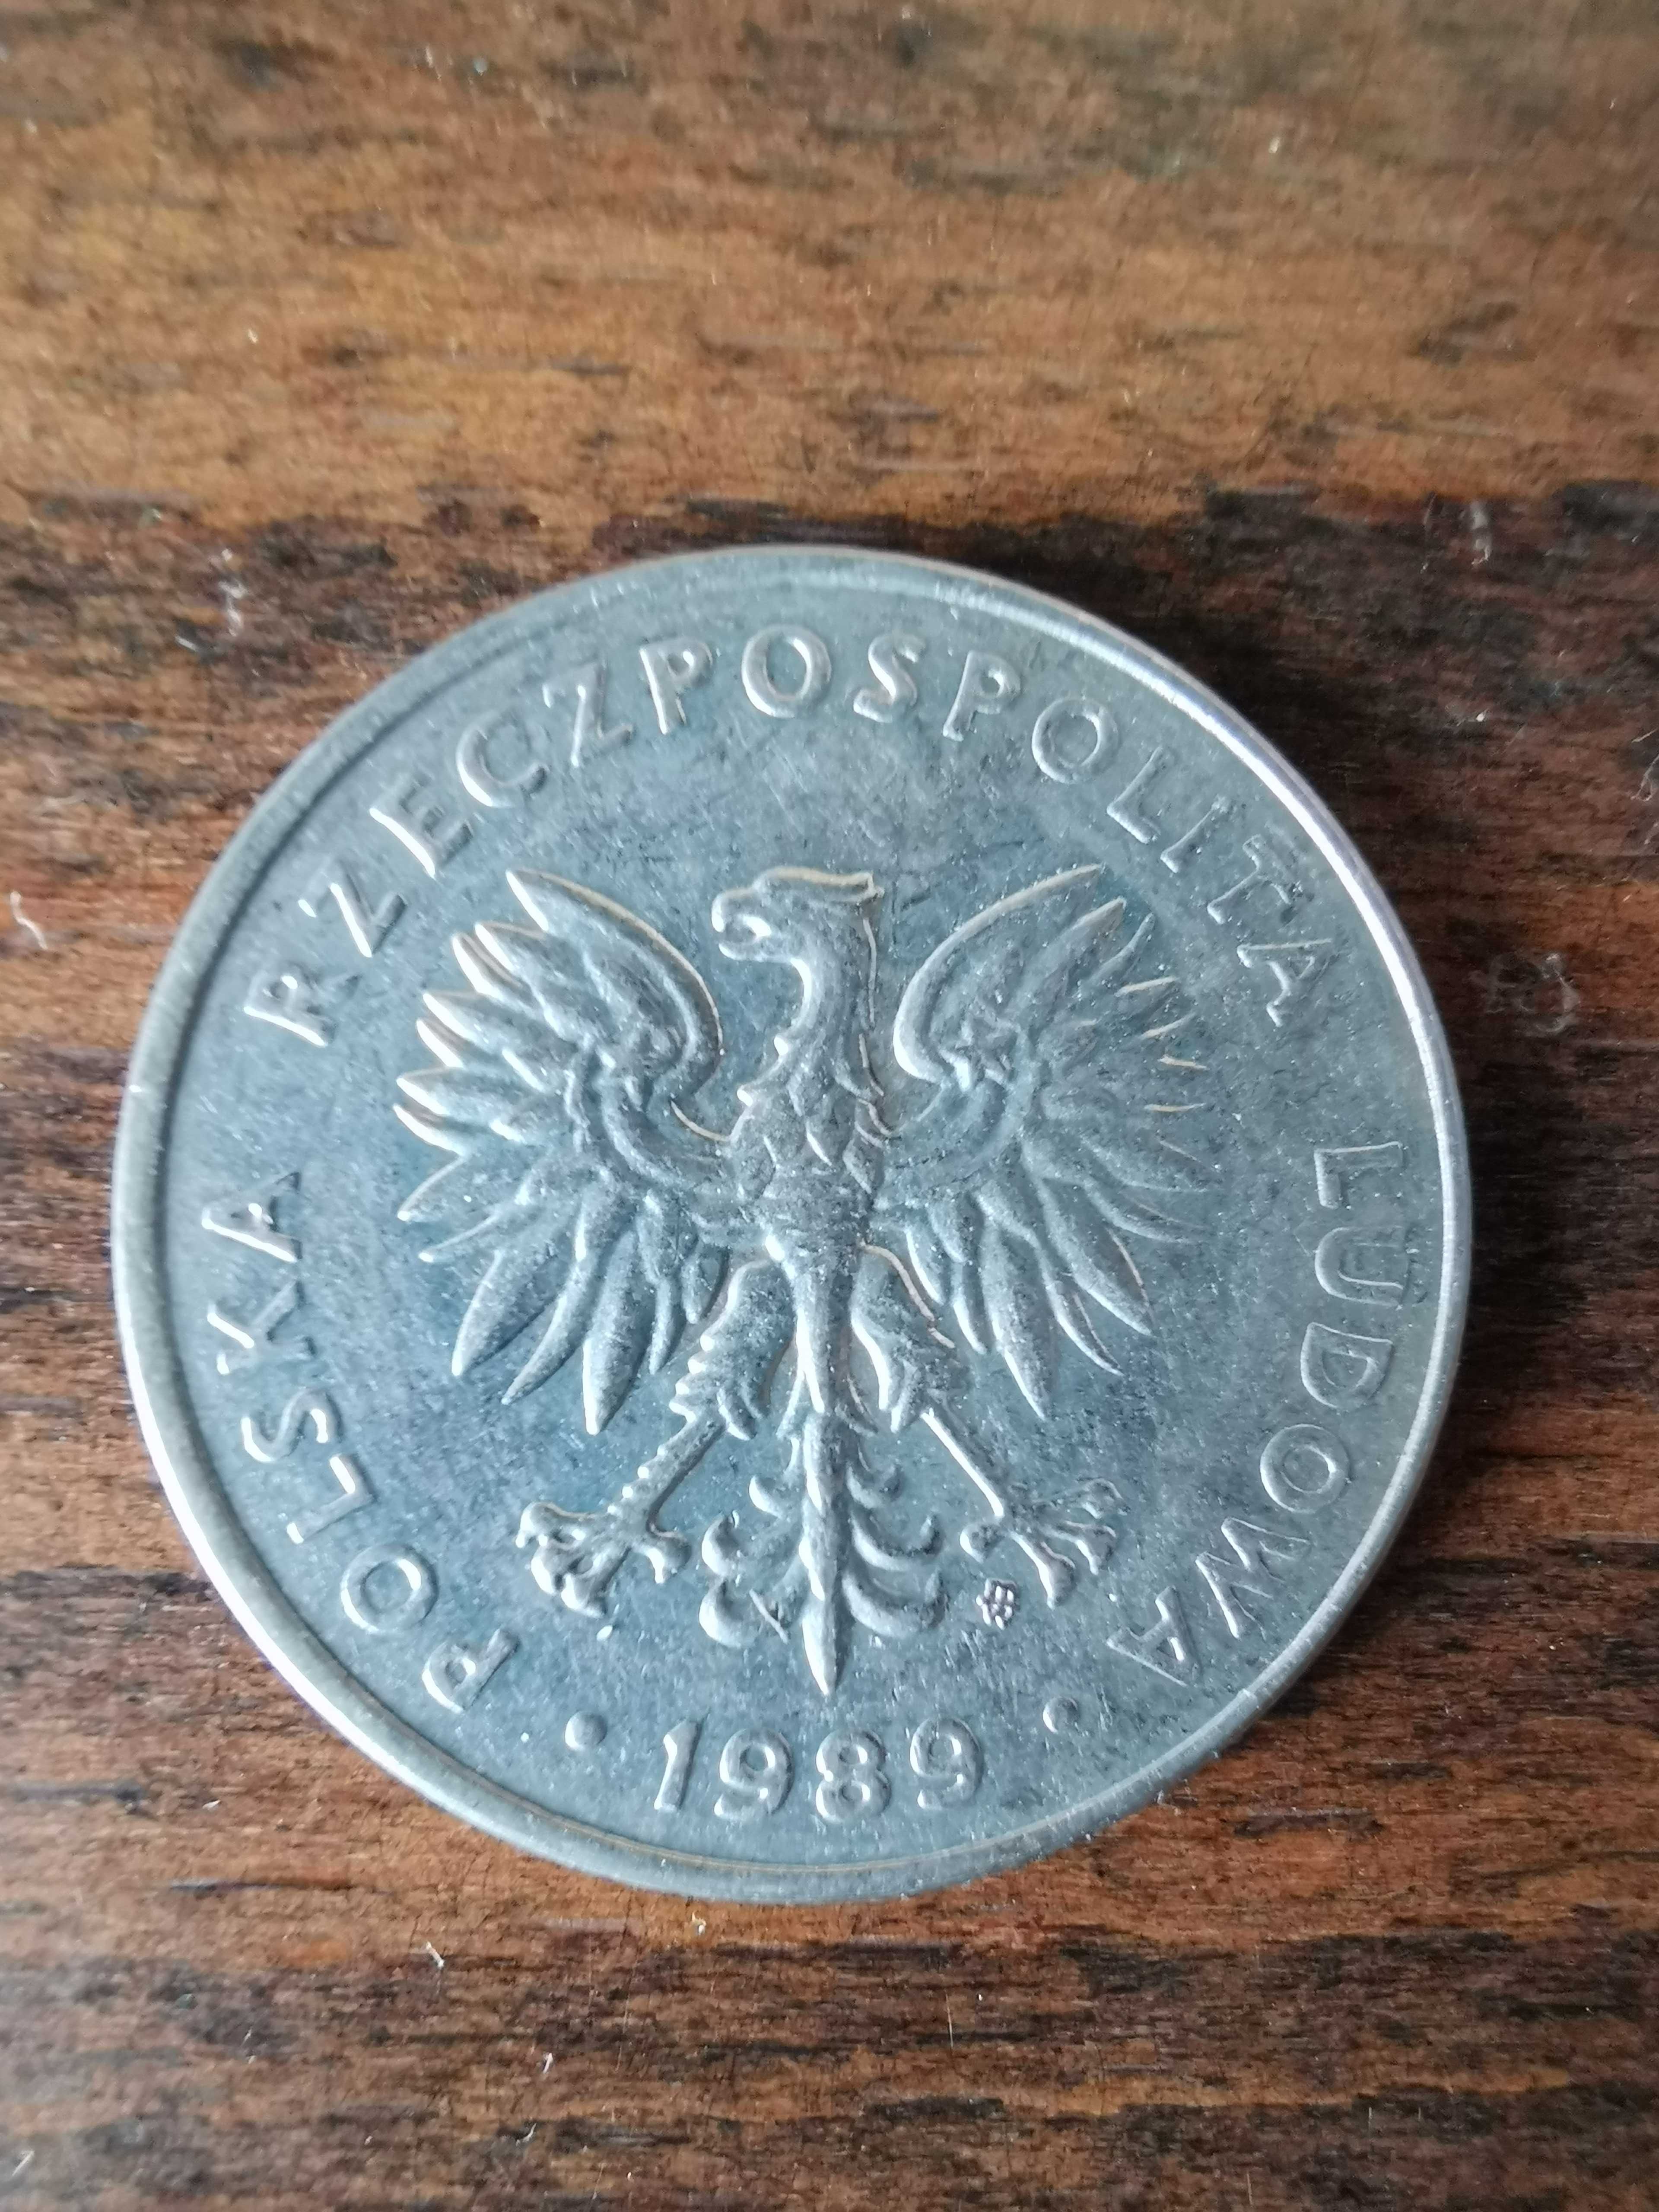 Moneta kolekcjonerska PRL, 20 zł z 1989 r.